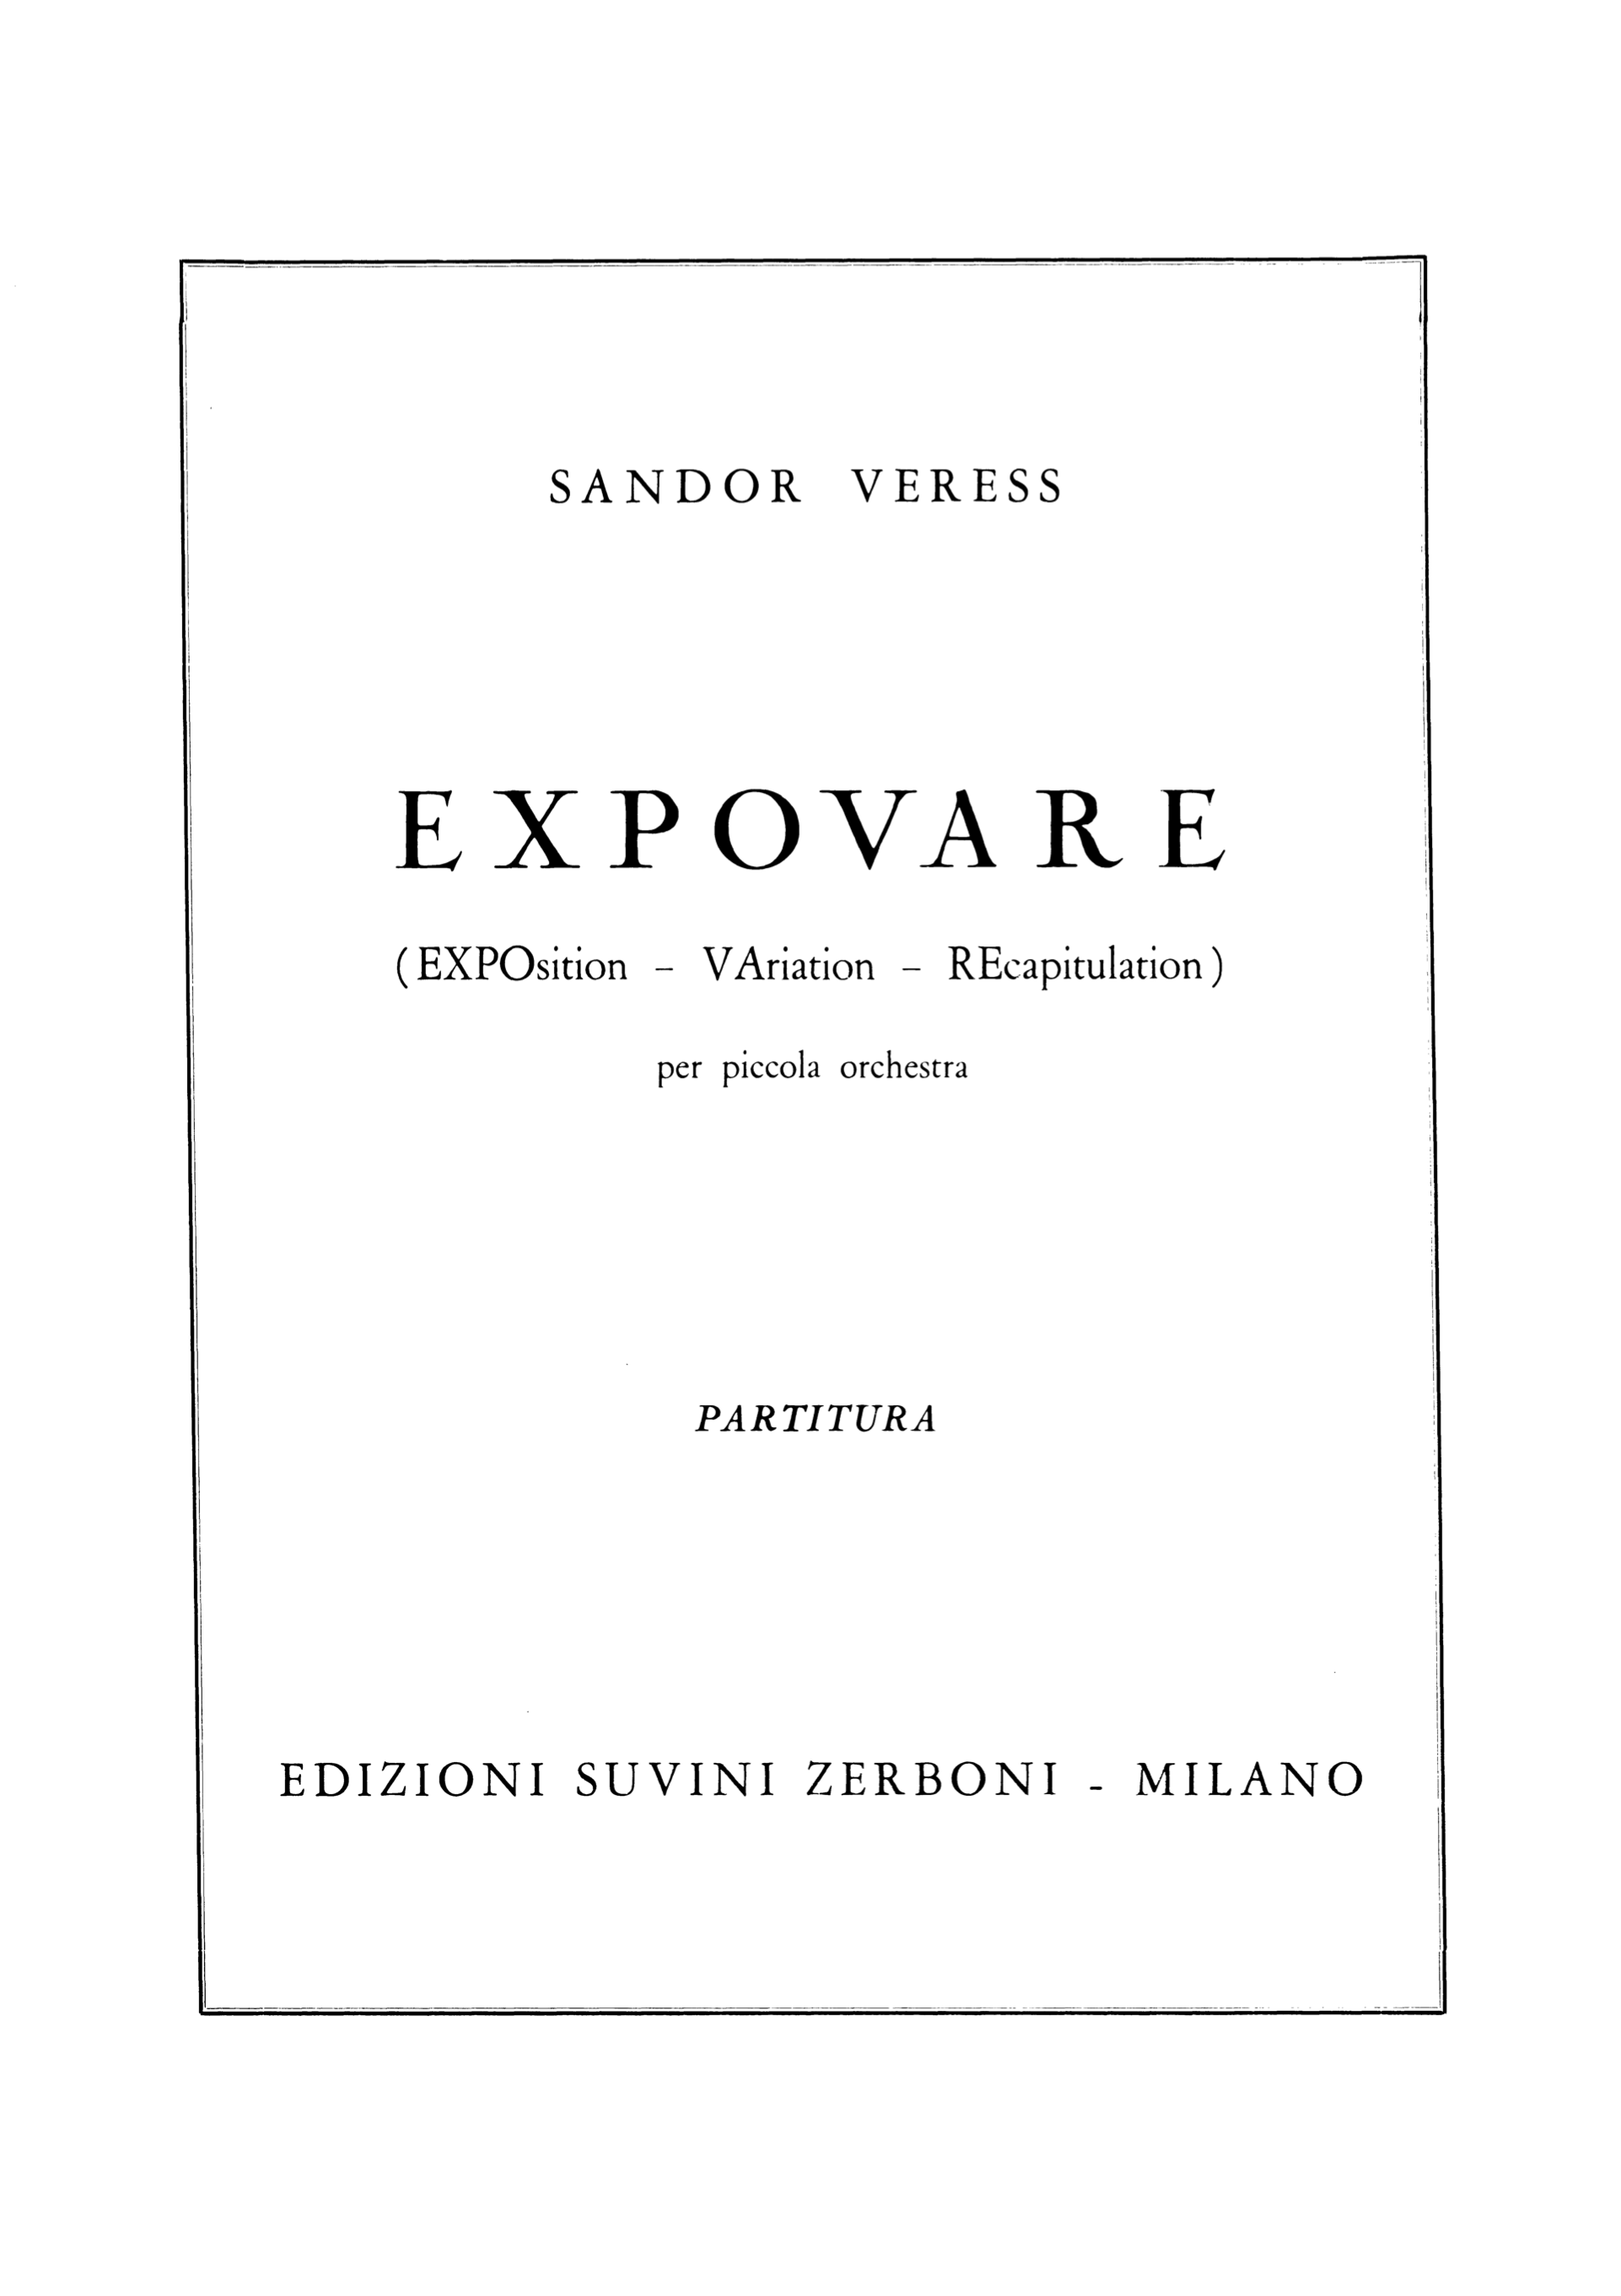 Expovare_Veress 1